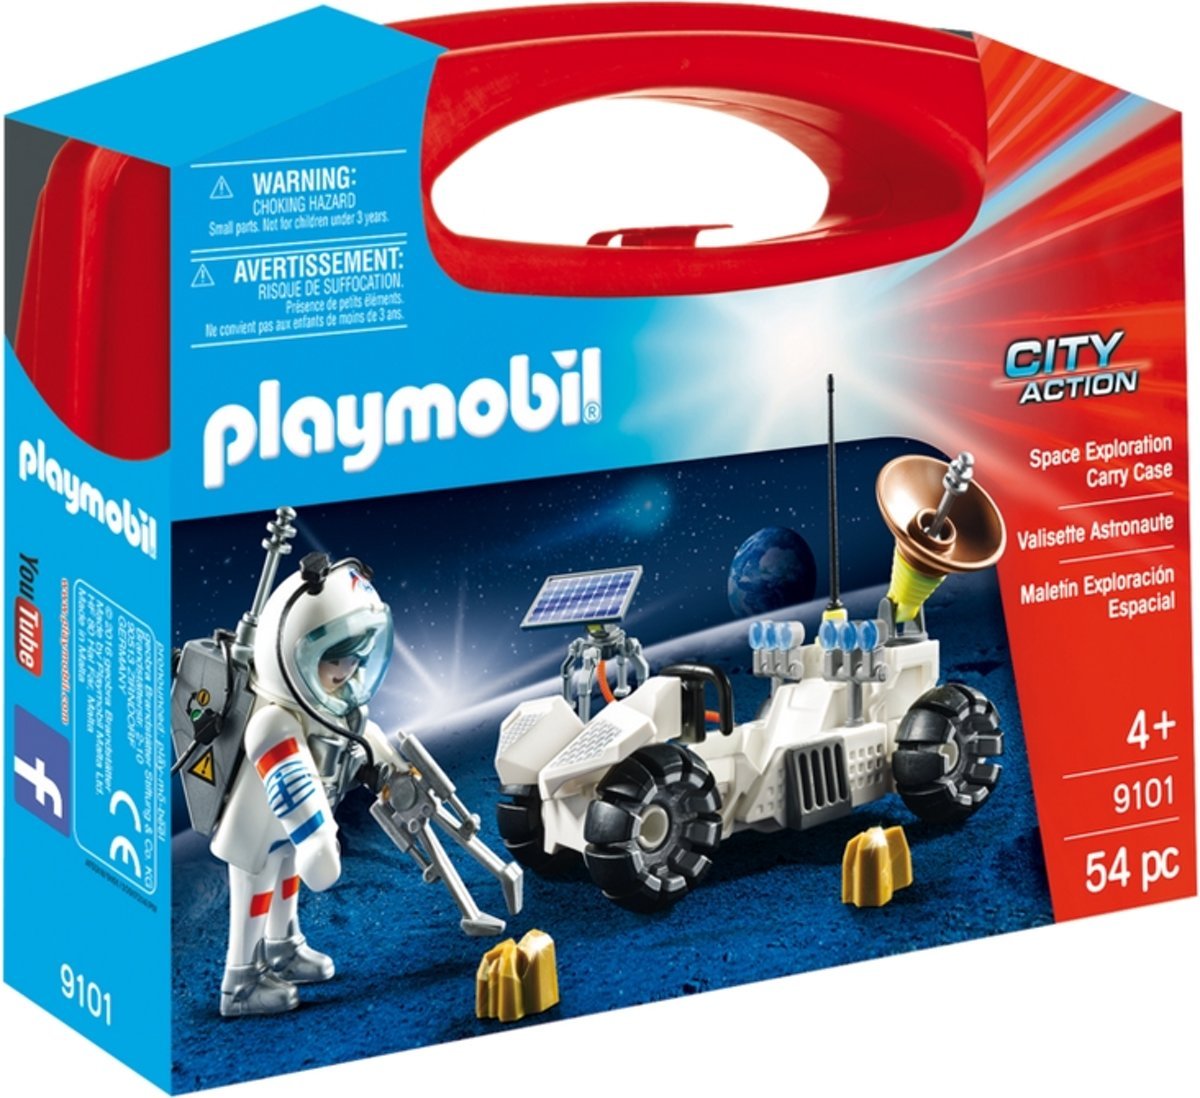 Playmobil 9101 City Action Space Explorer Carry Case